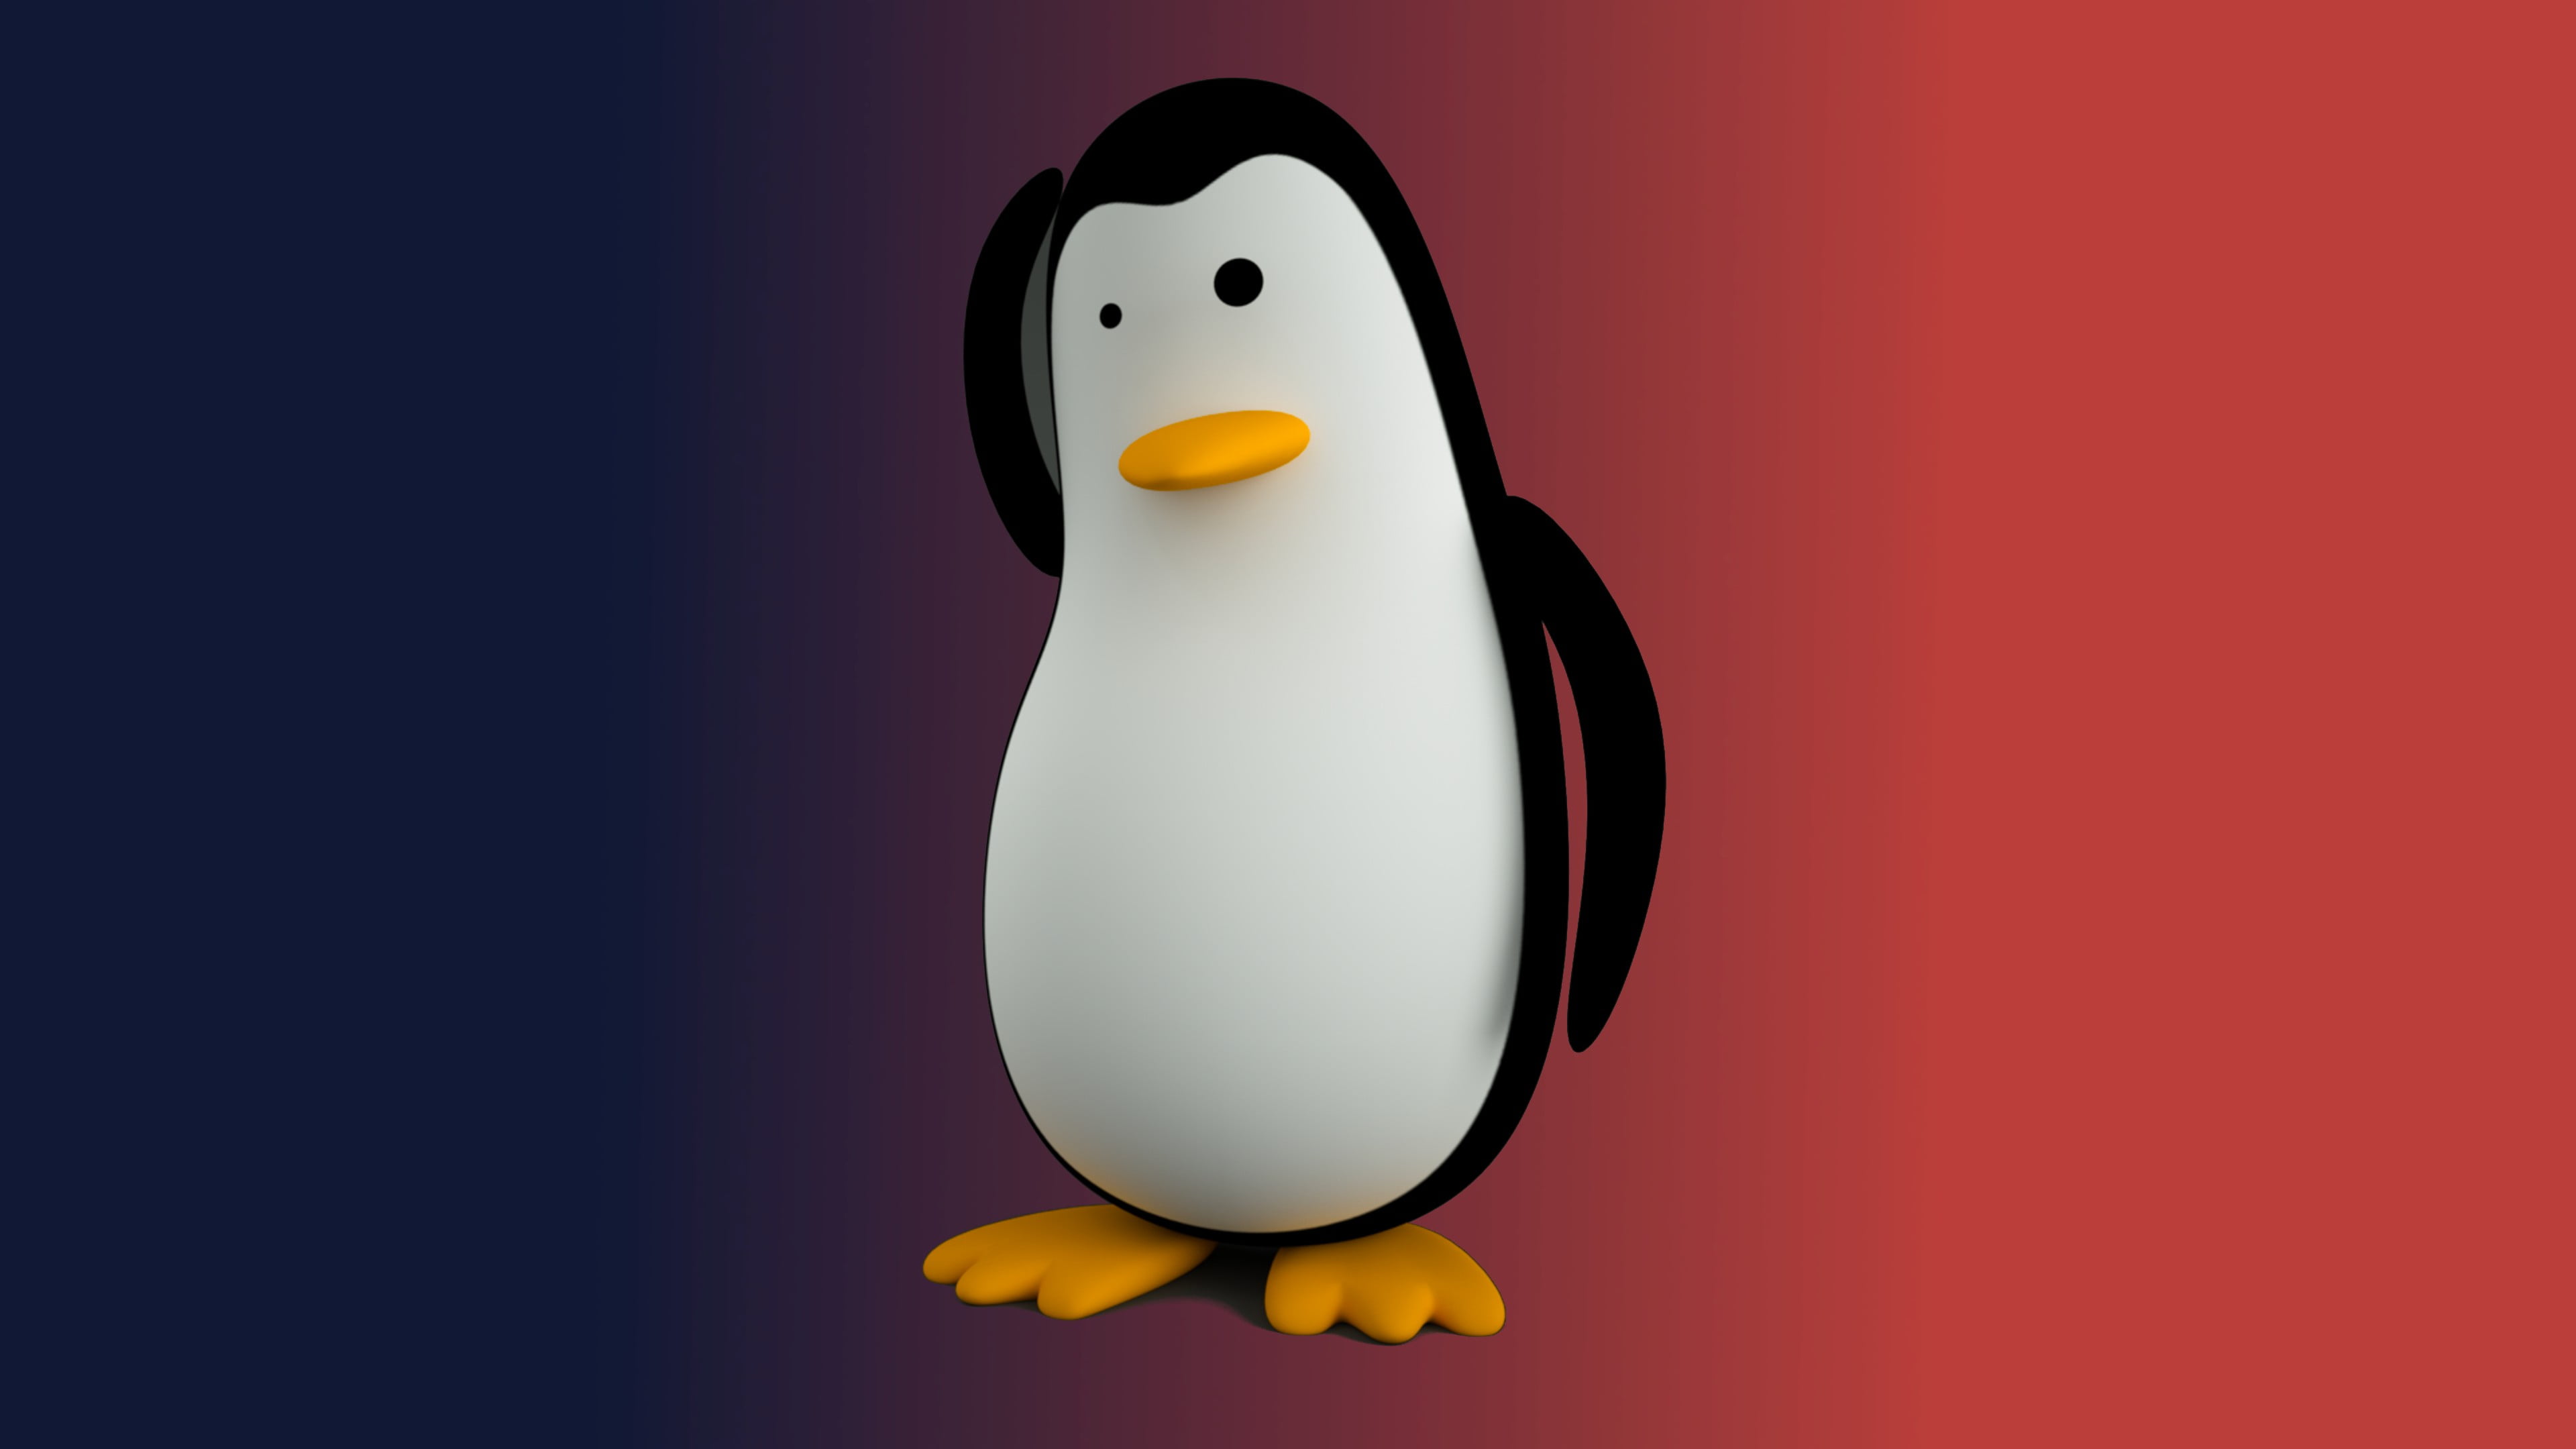 Black Penguin And Blue Shark Art Work Linux Tux